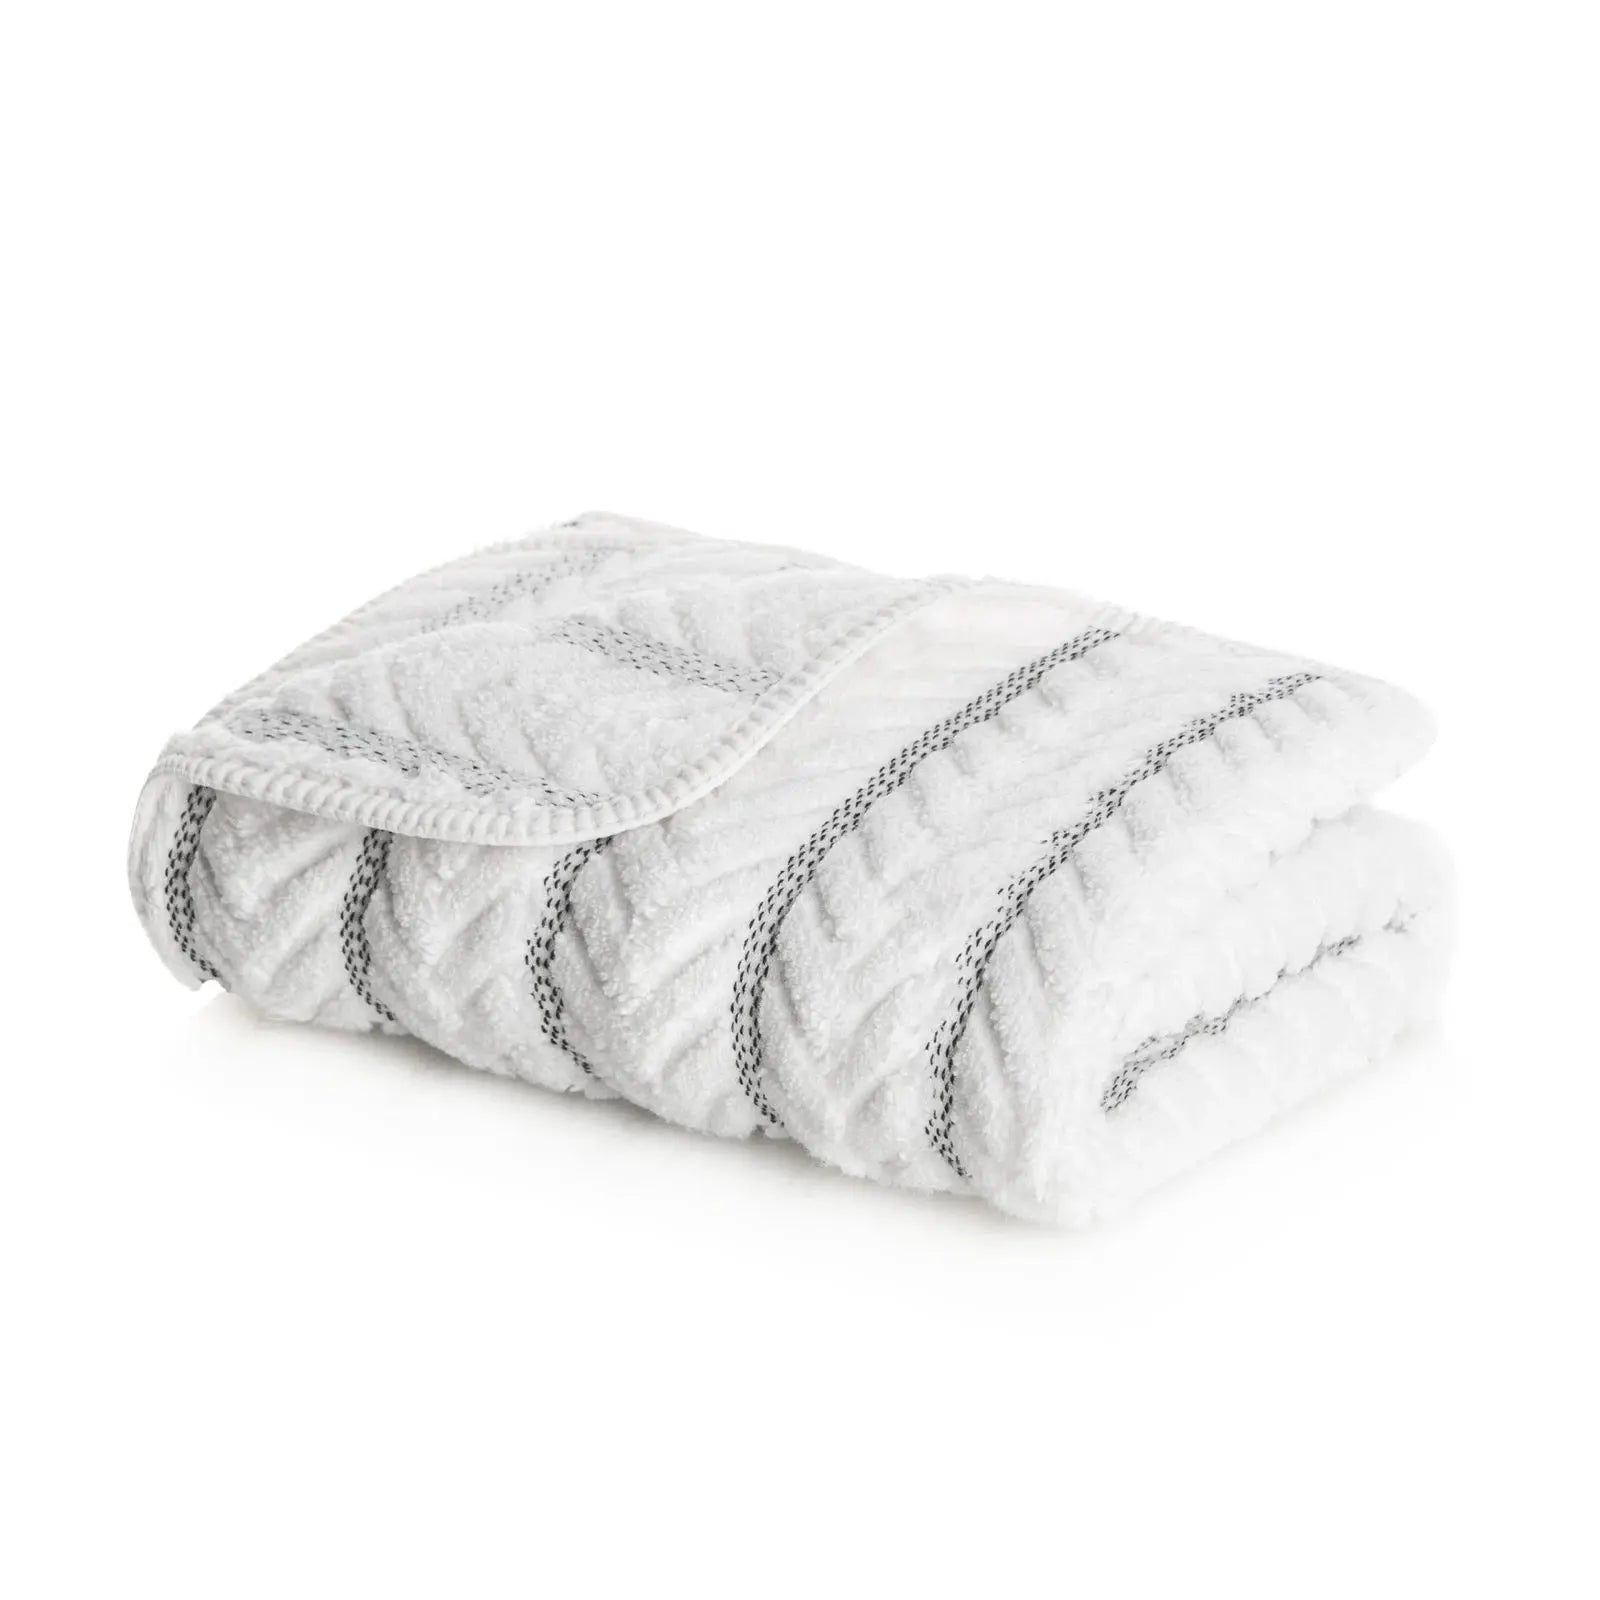 Graccioza Herron Bath Towel in White